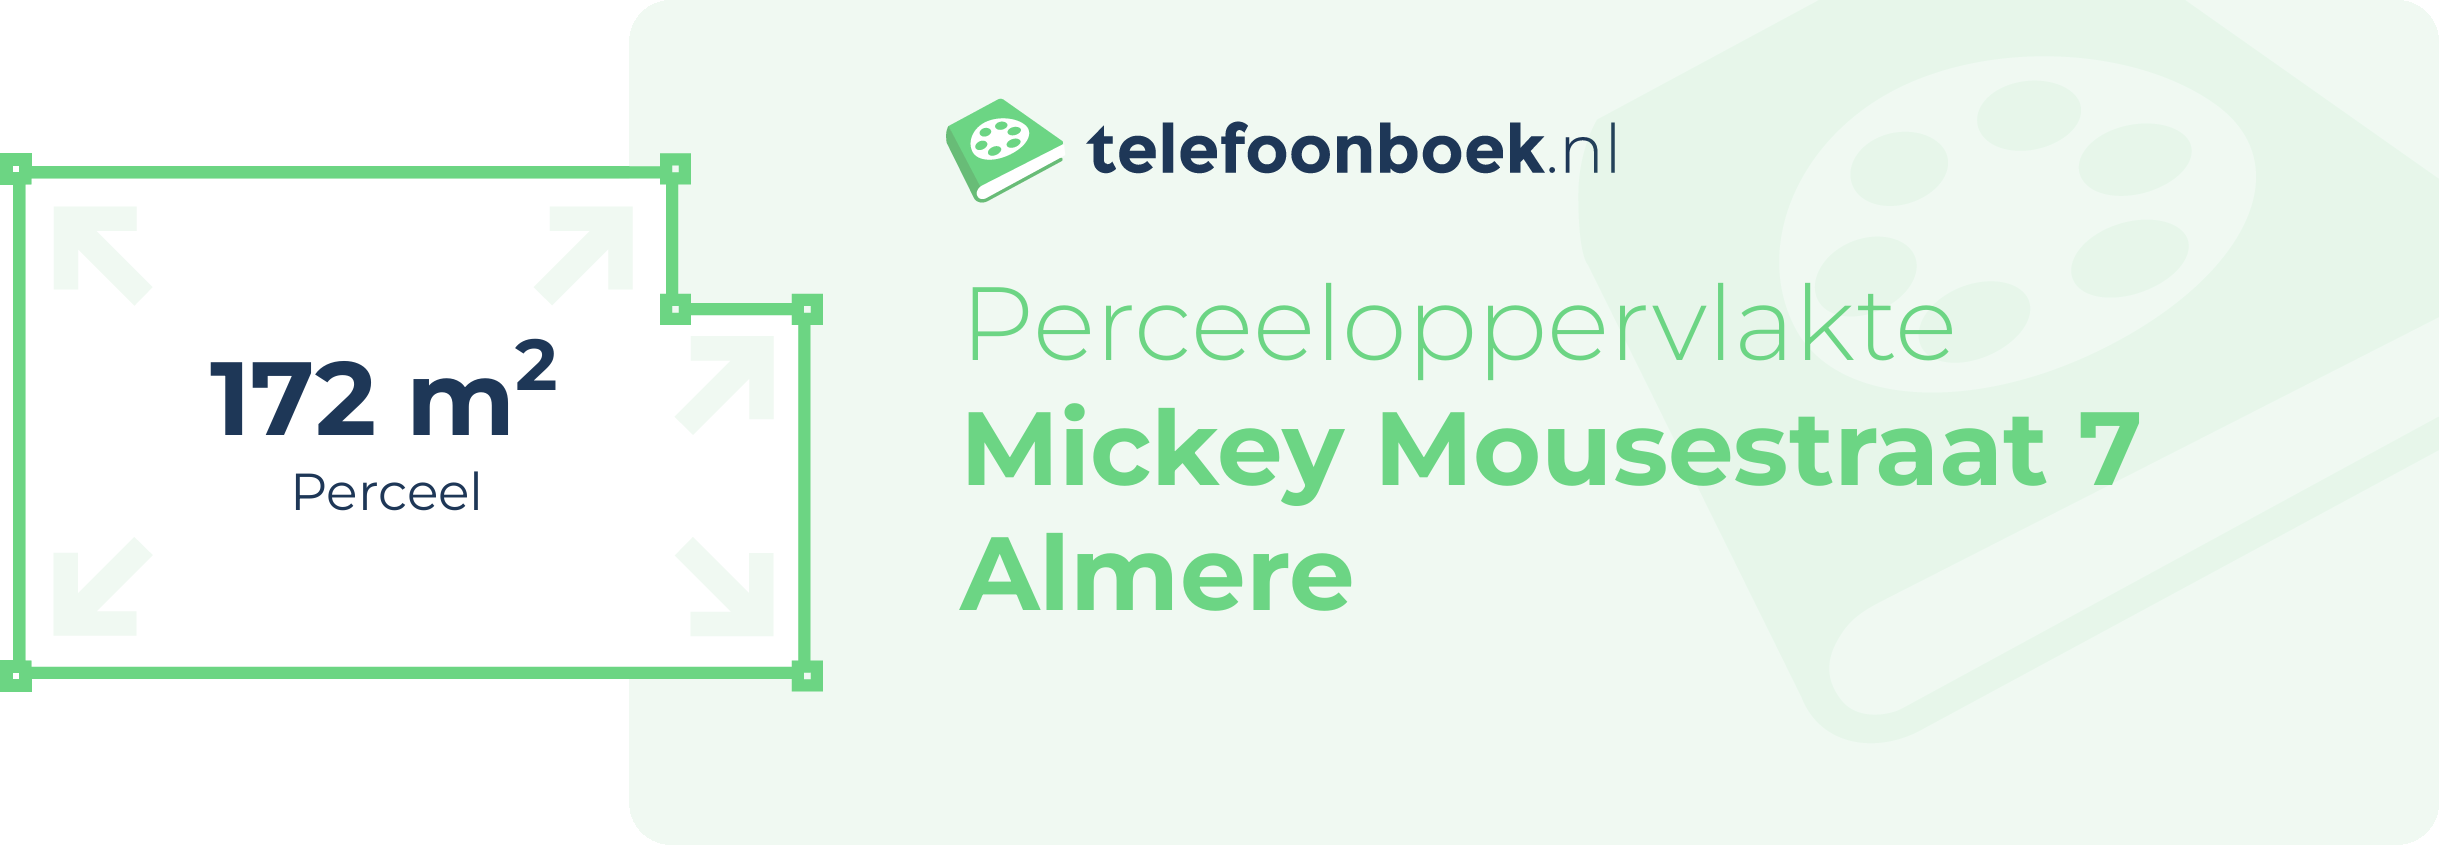 Perceeloppervlakte Mickey Mousestraat 7 Almere